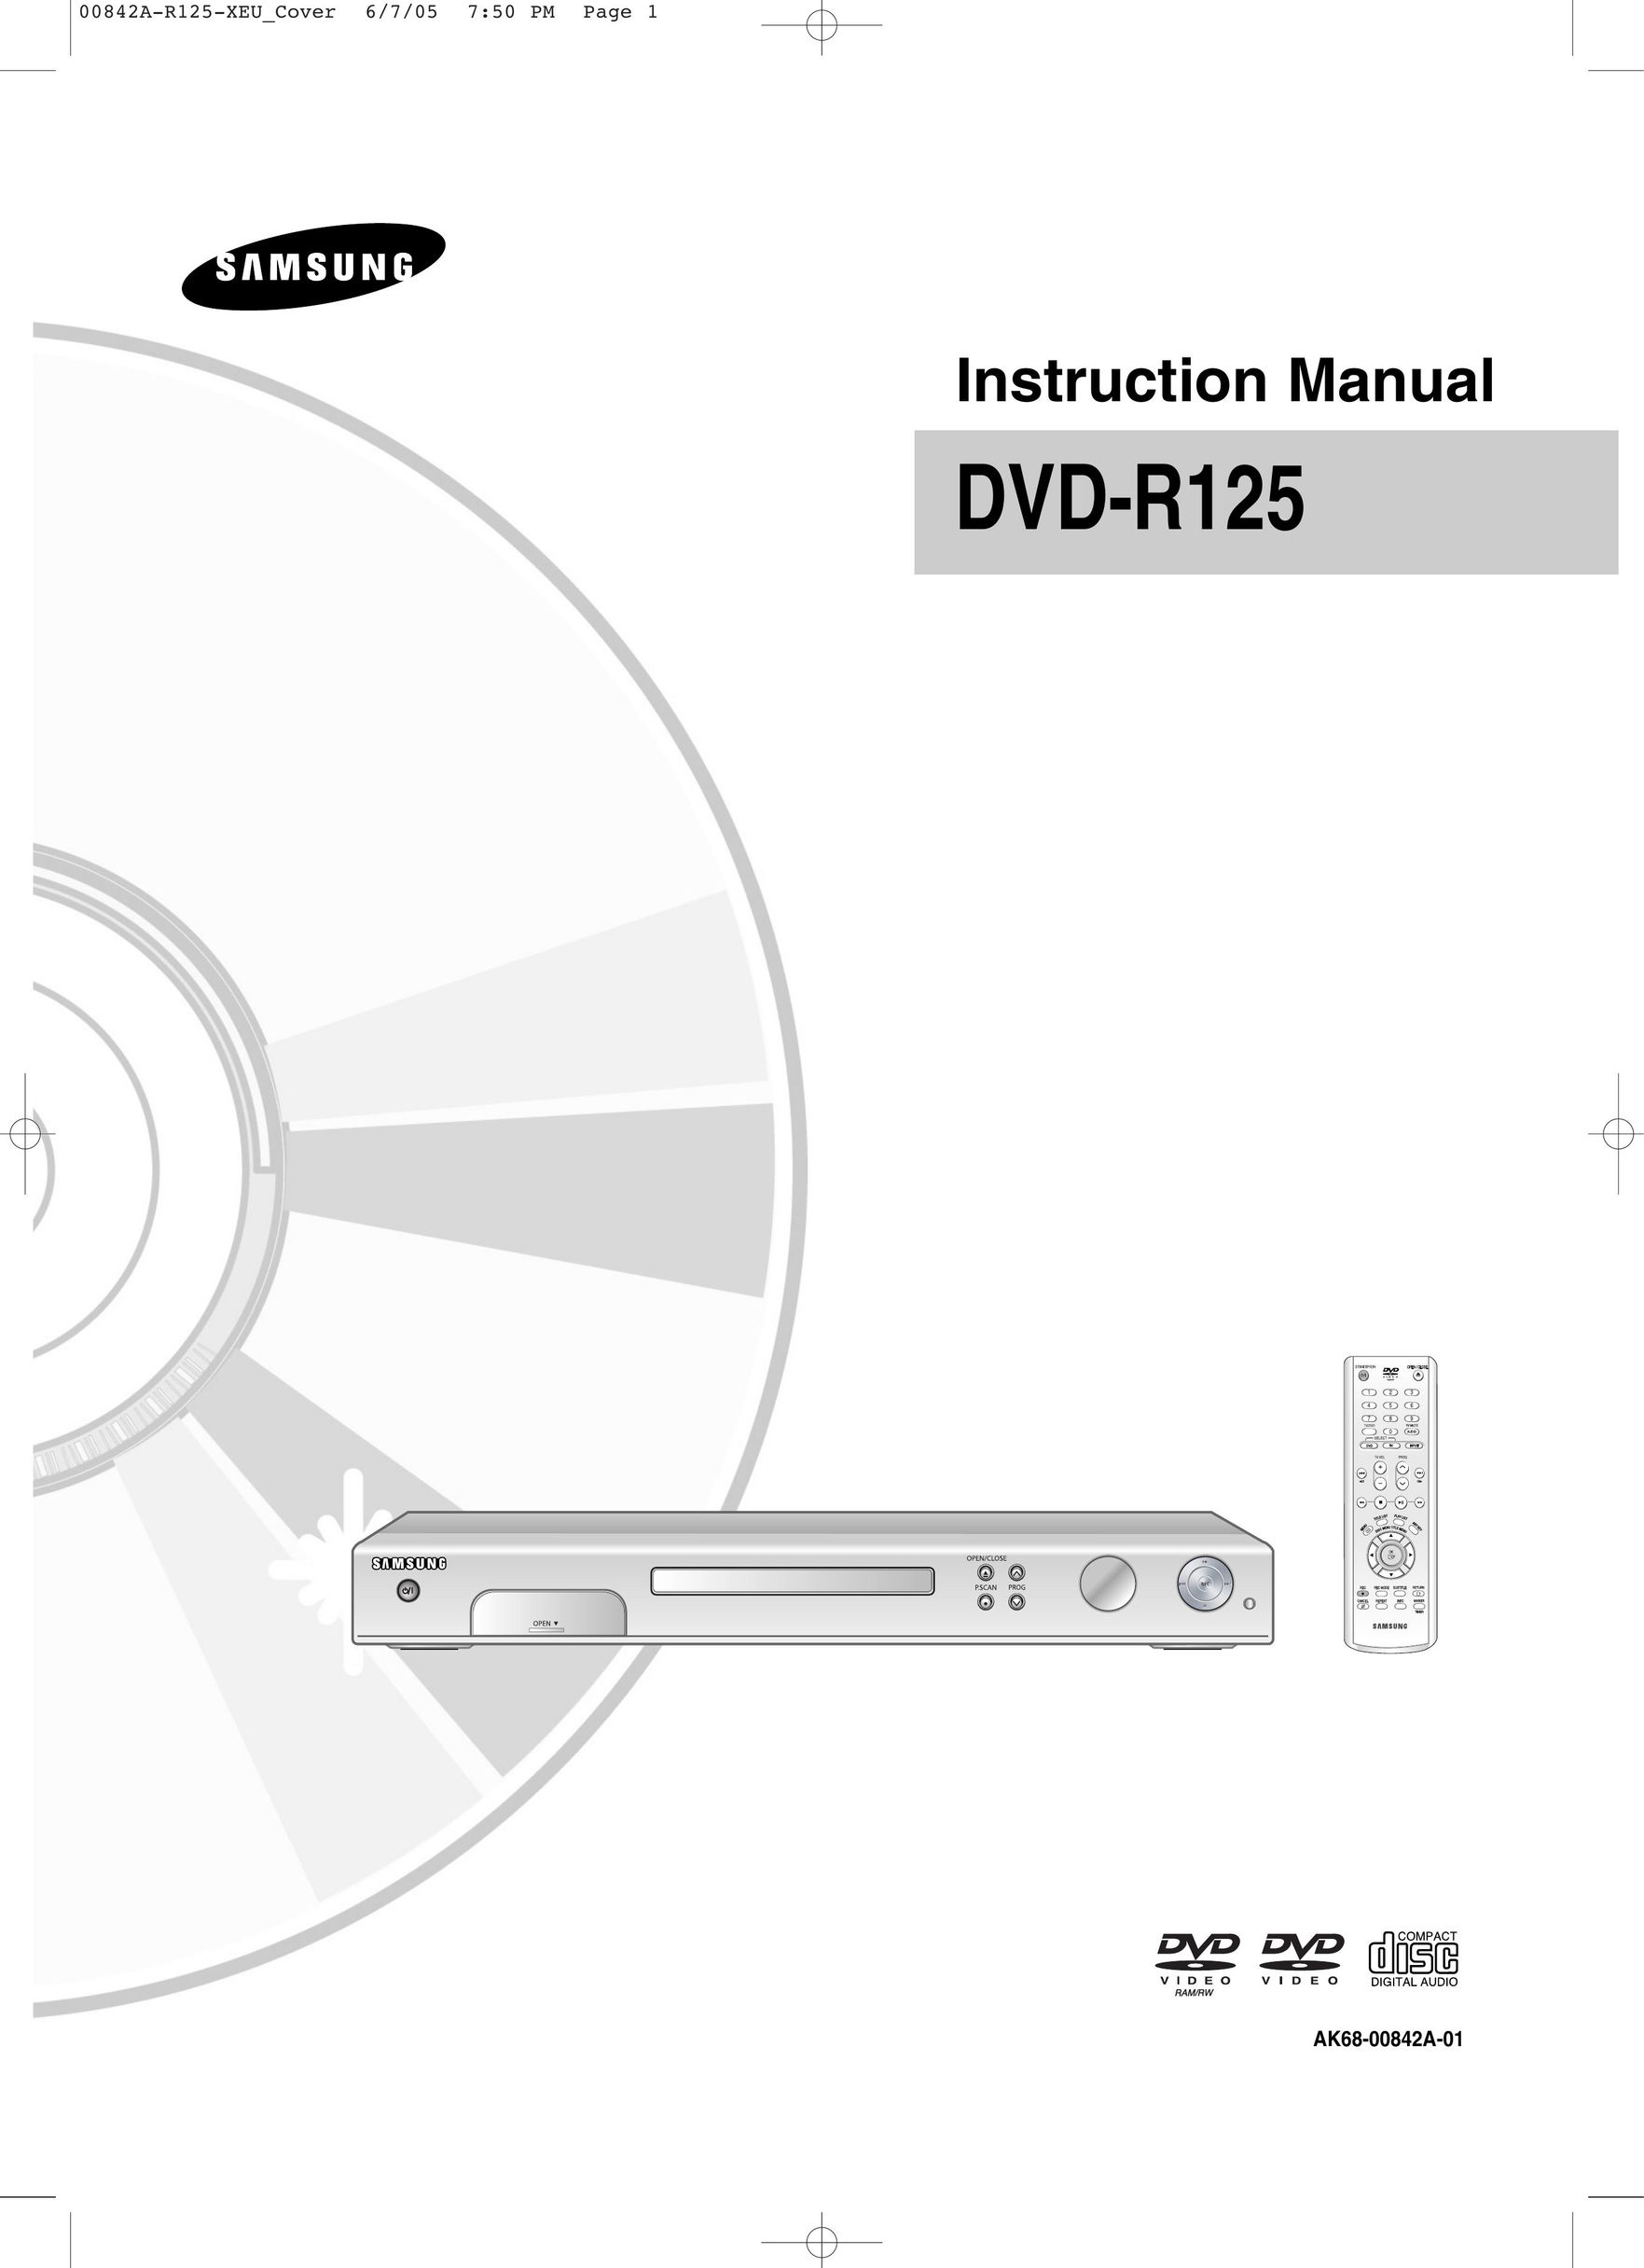 Samsung DVD-R125 DVD Recorder User Manual